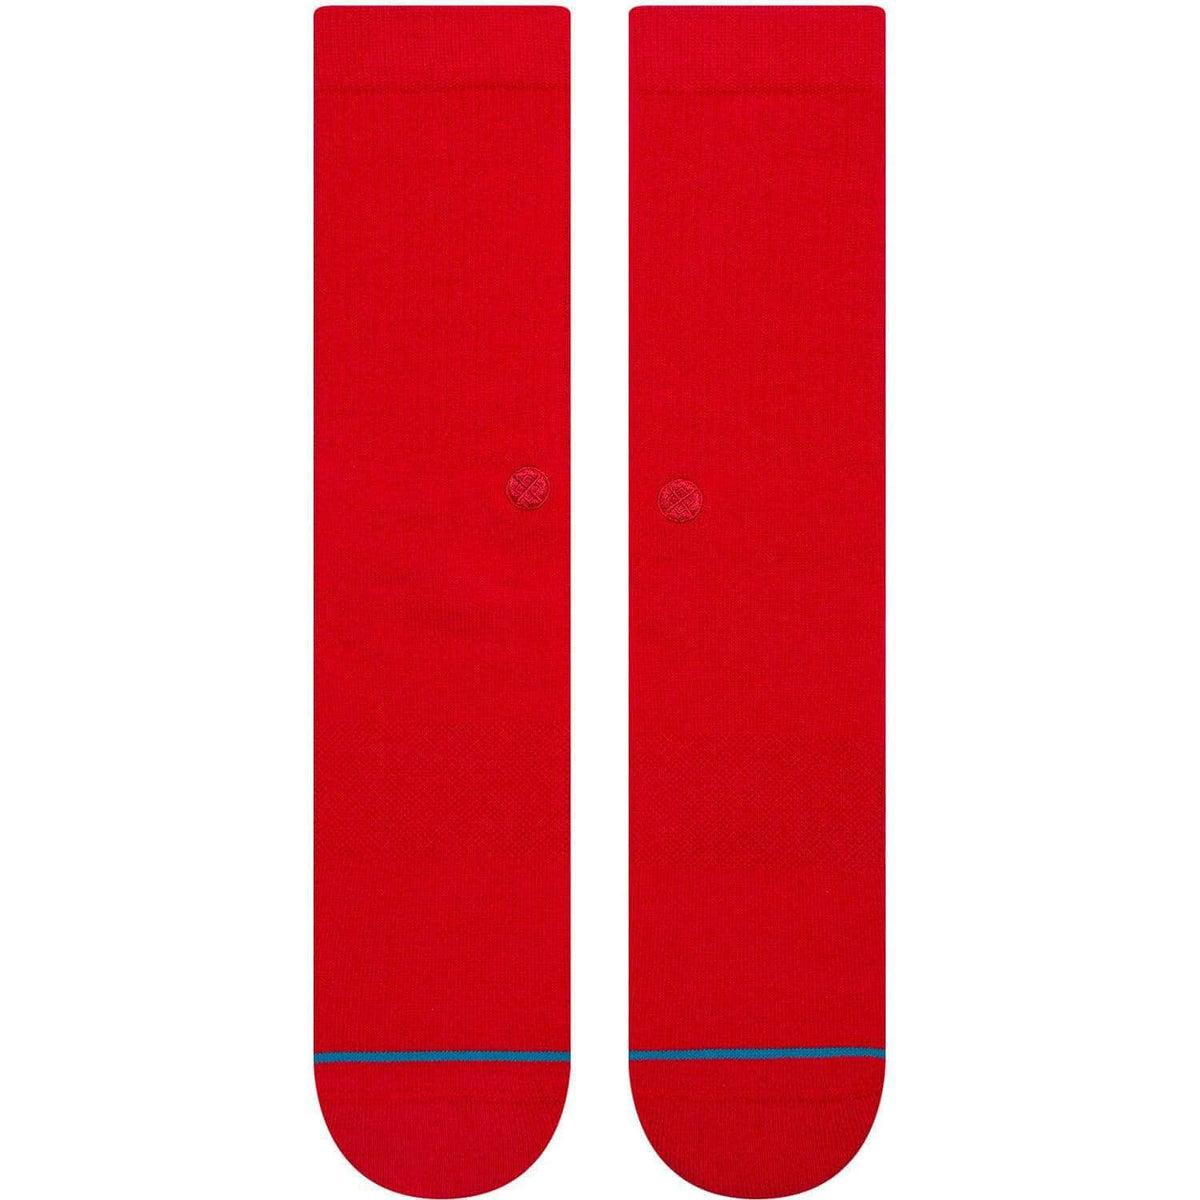 Stance Icon Socks - Red - Mens Crew Length Socks by Stance L (UK8-12.5)